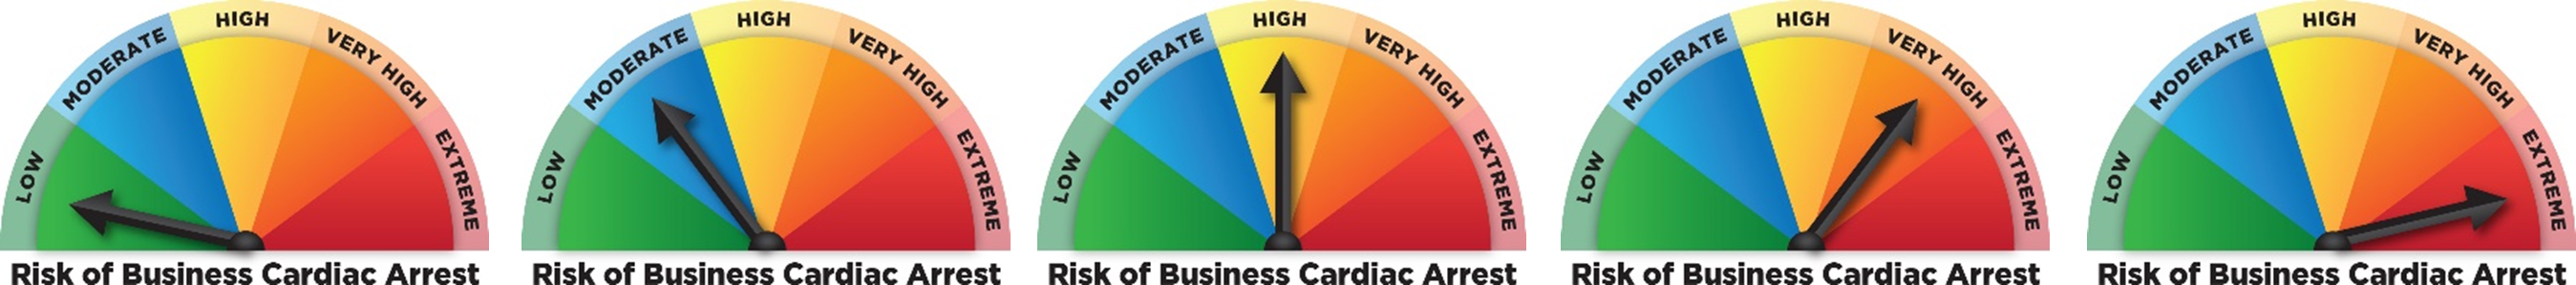 5 Business Cardiac Arrest Risk Levels